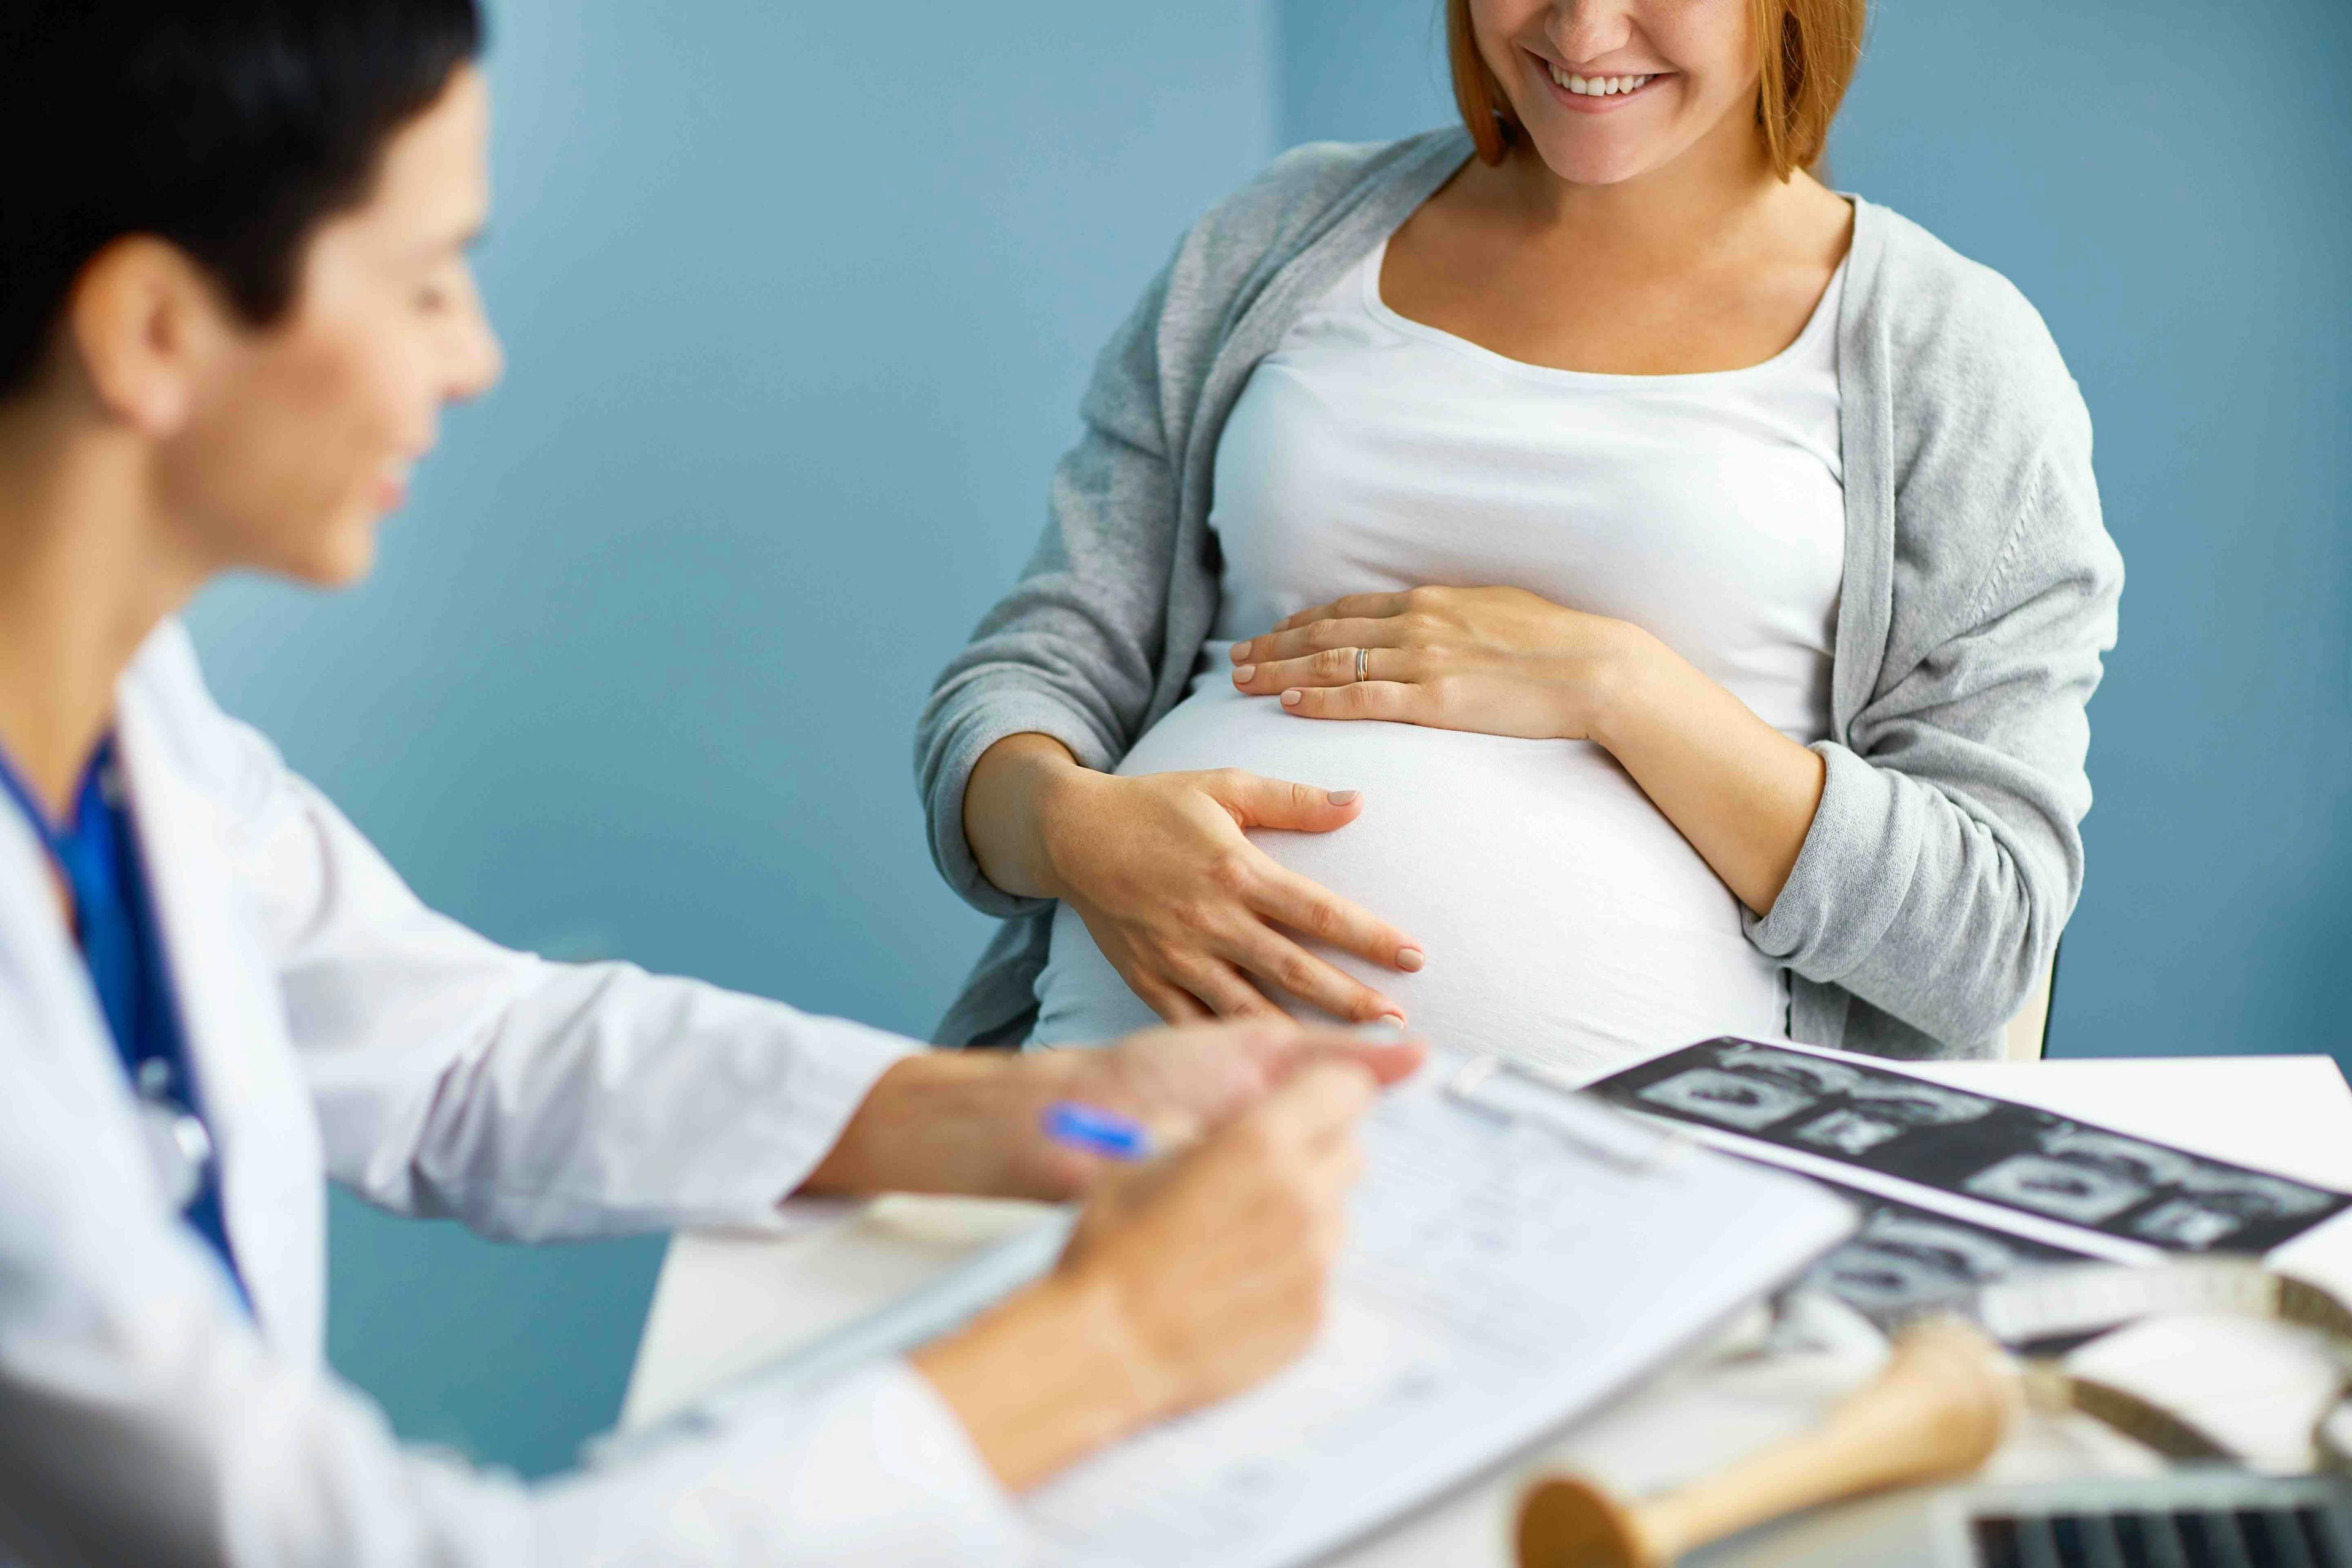 Doctor visit during pregnancy | Image credit: pressmaster – stock.adobe.com